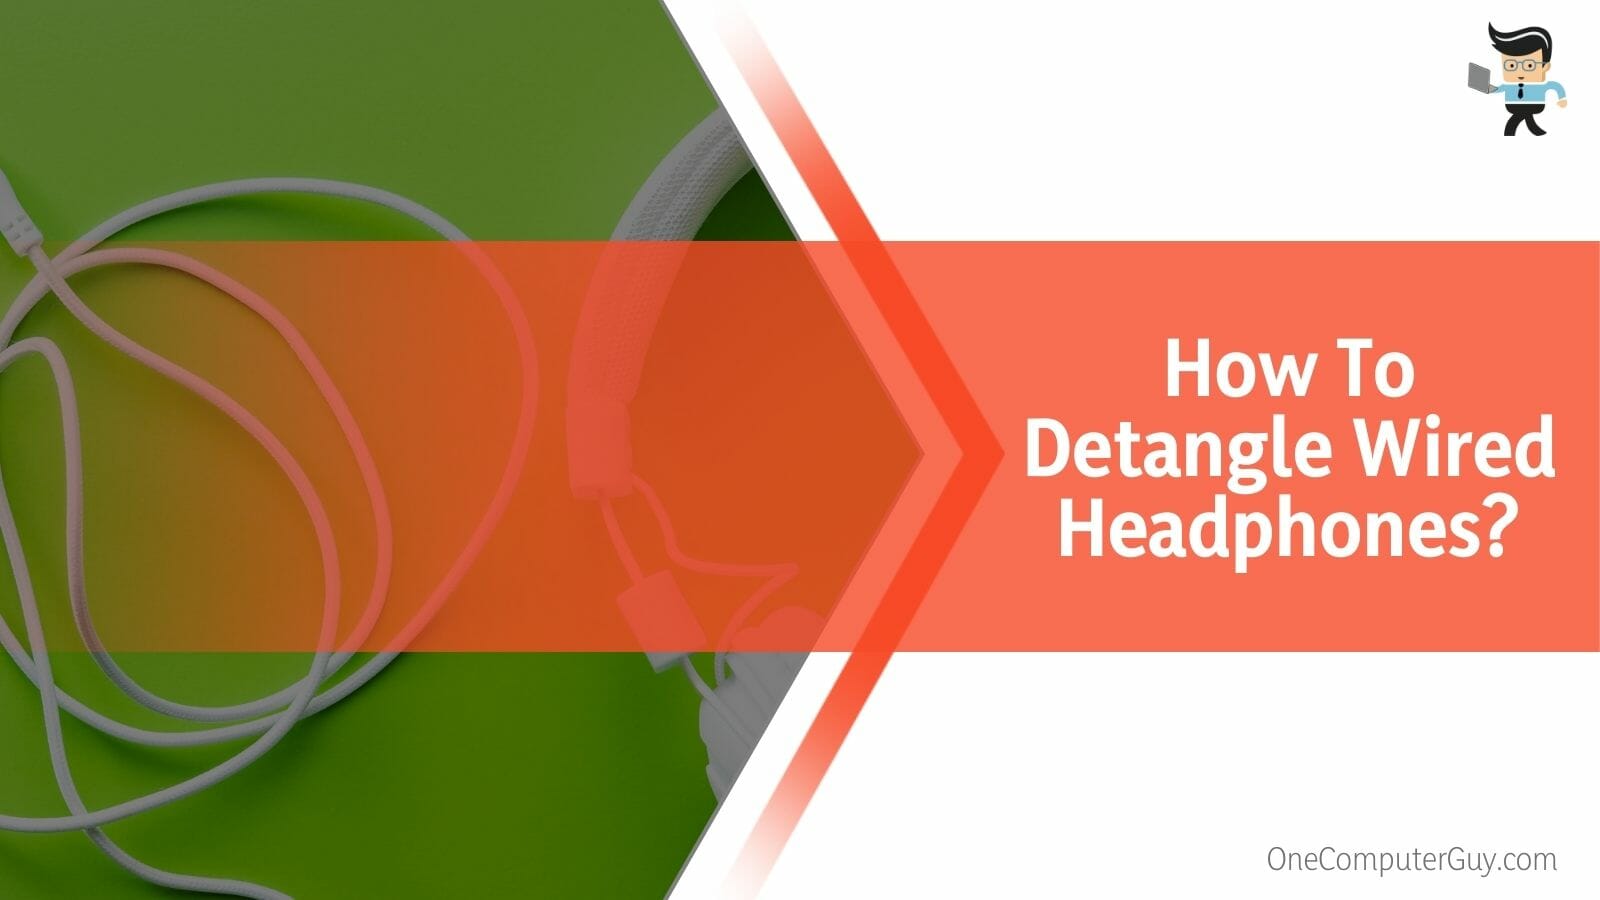 How To Detangle Wired Headphones